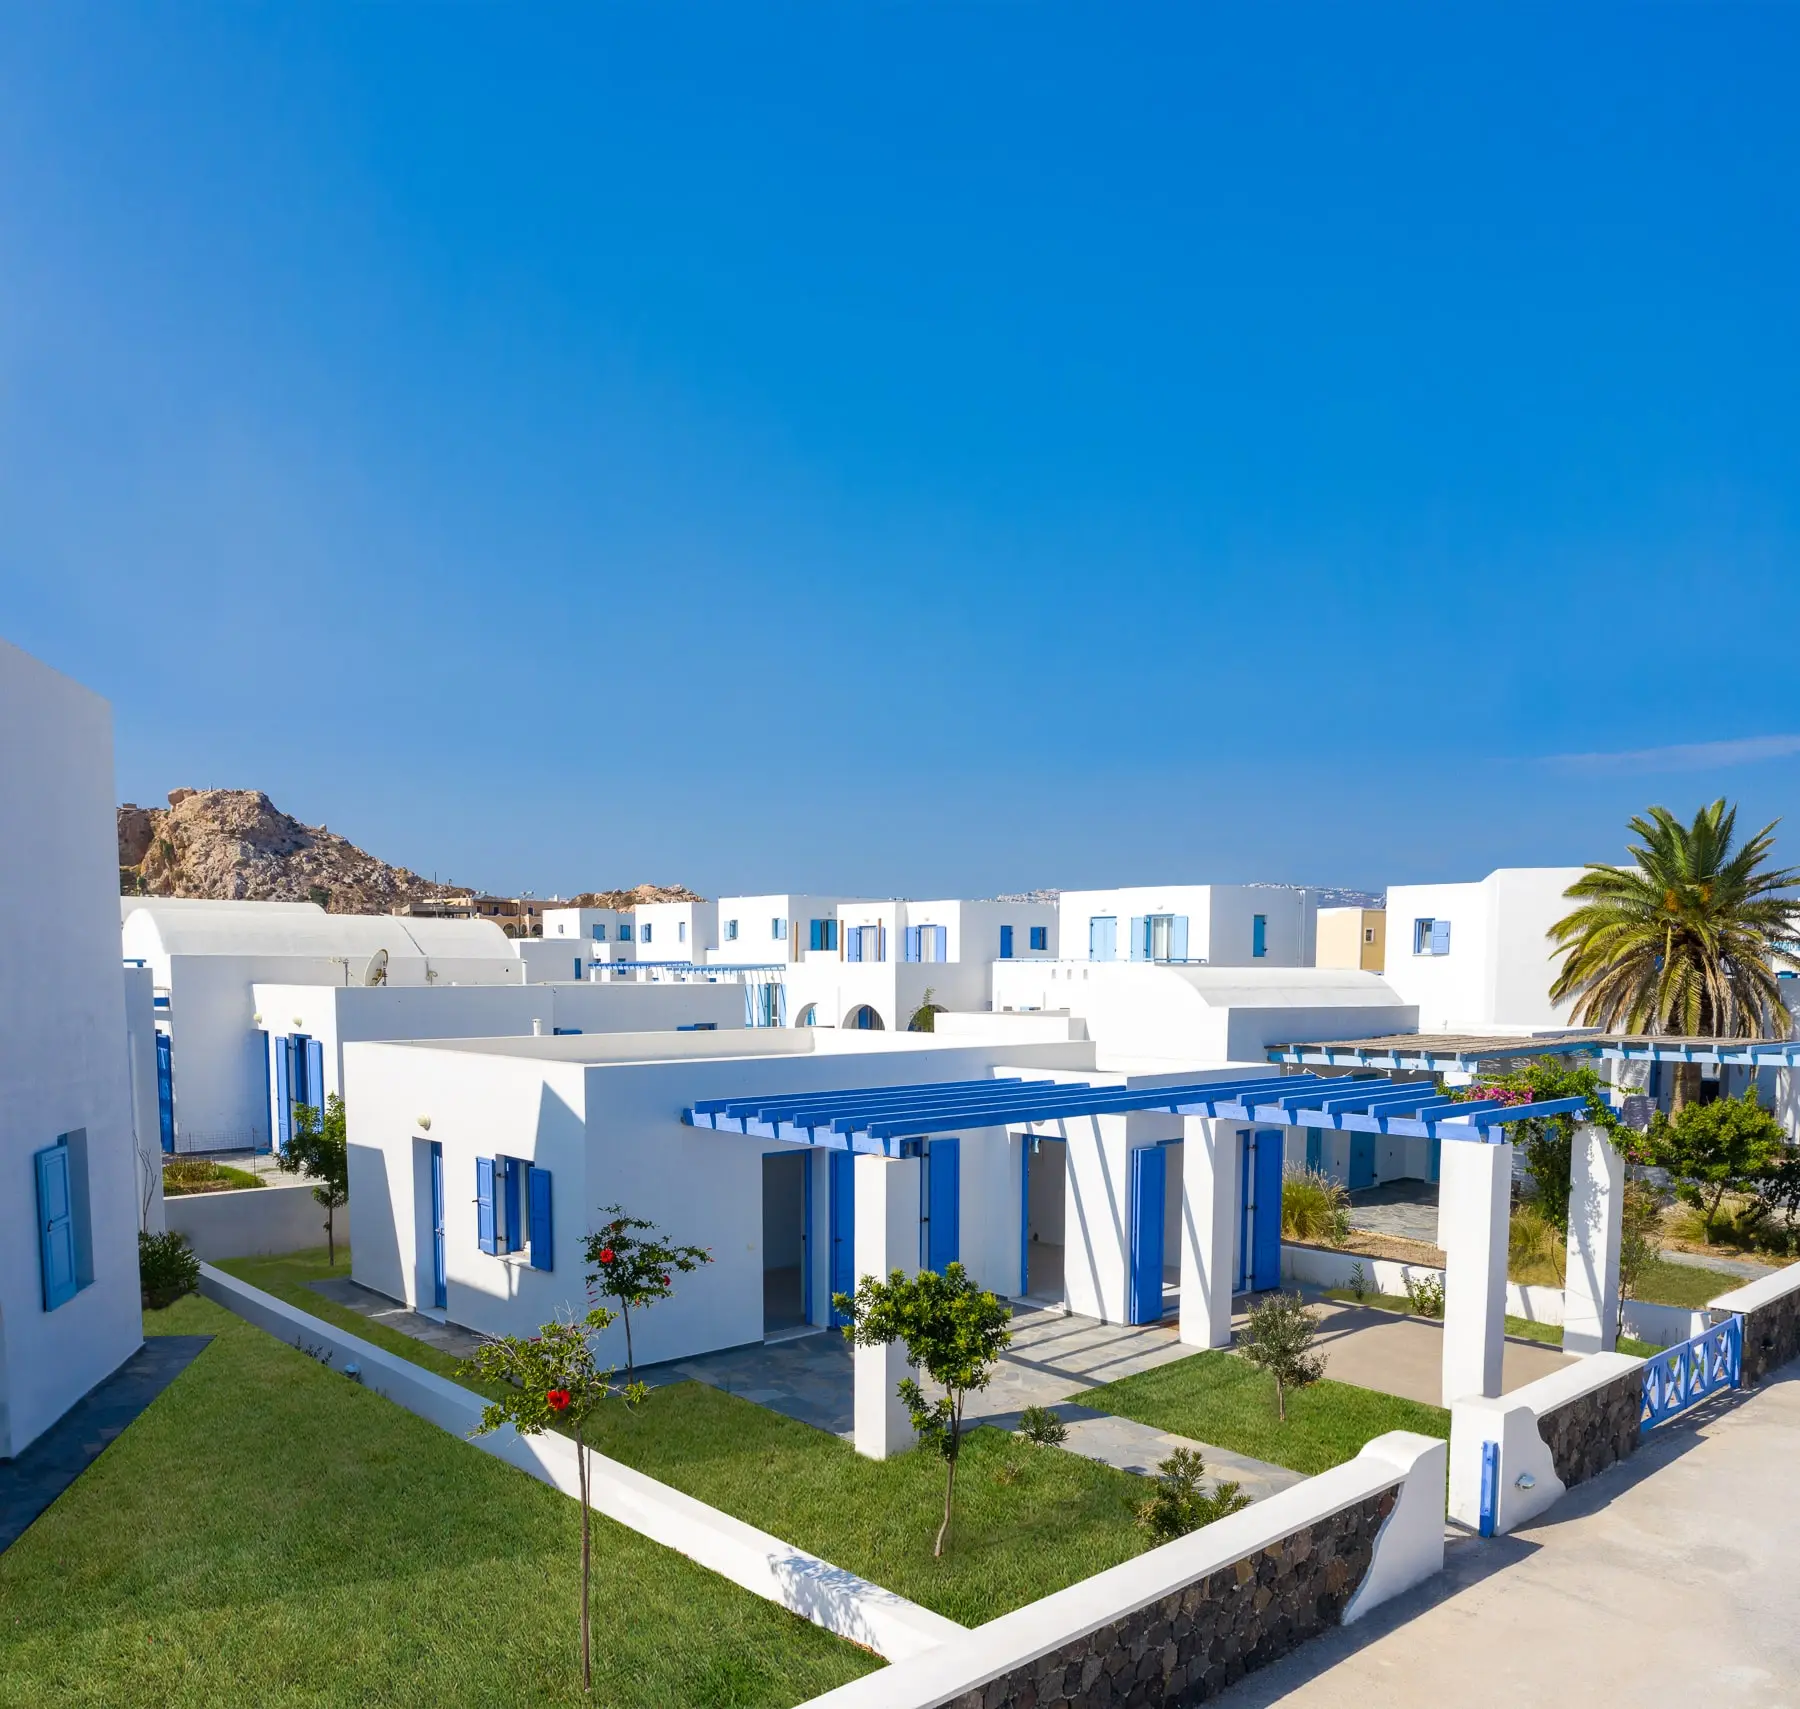 Acropolis Homes - Santorini Villas - Real Estate Agency - Real Estate Photo - Estate Development